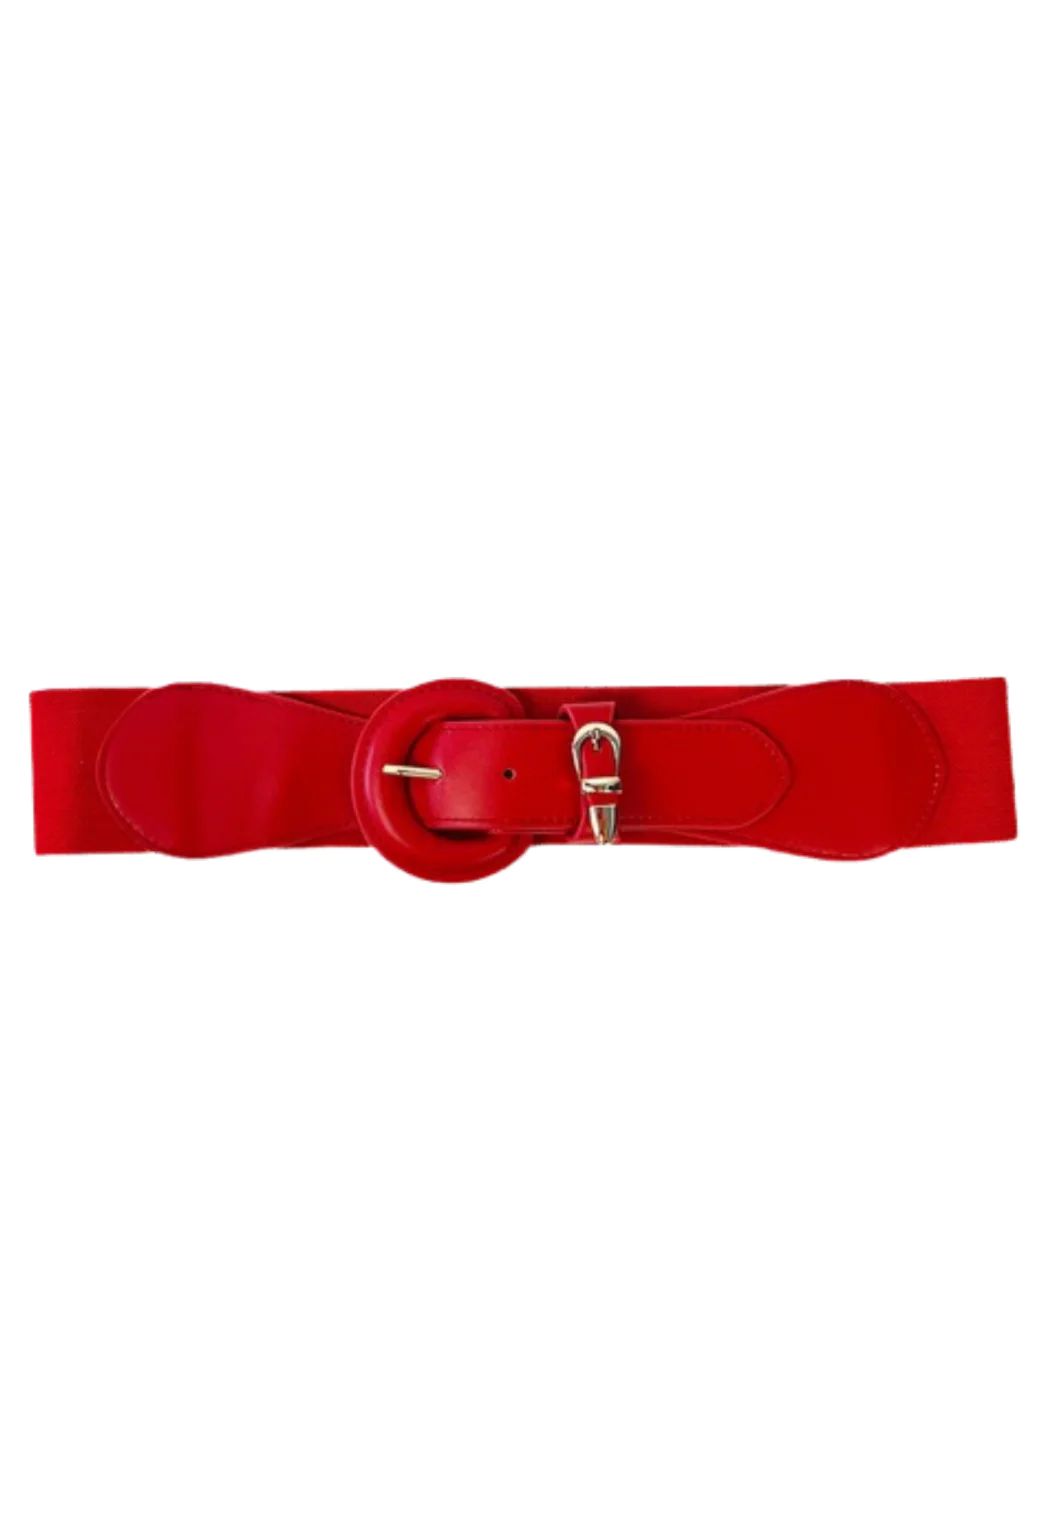 Working Girl Belt - Red | Shop BURU